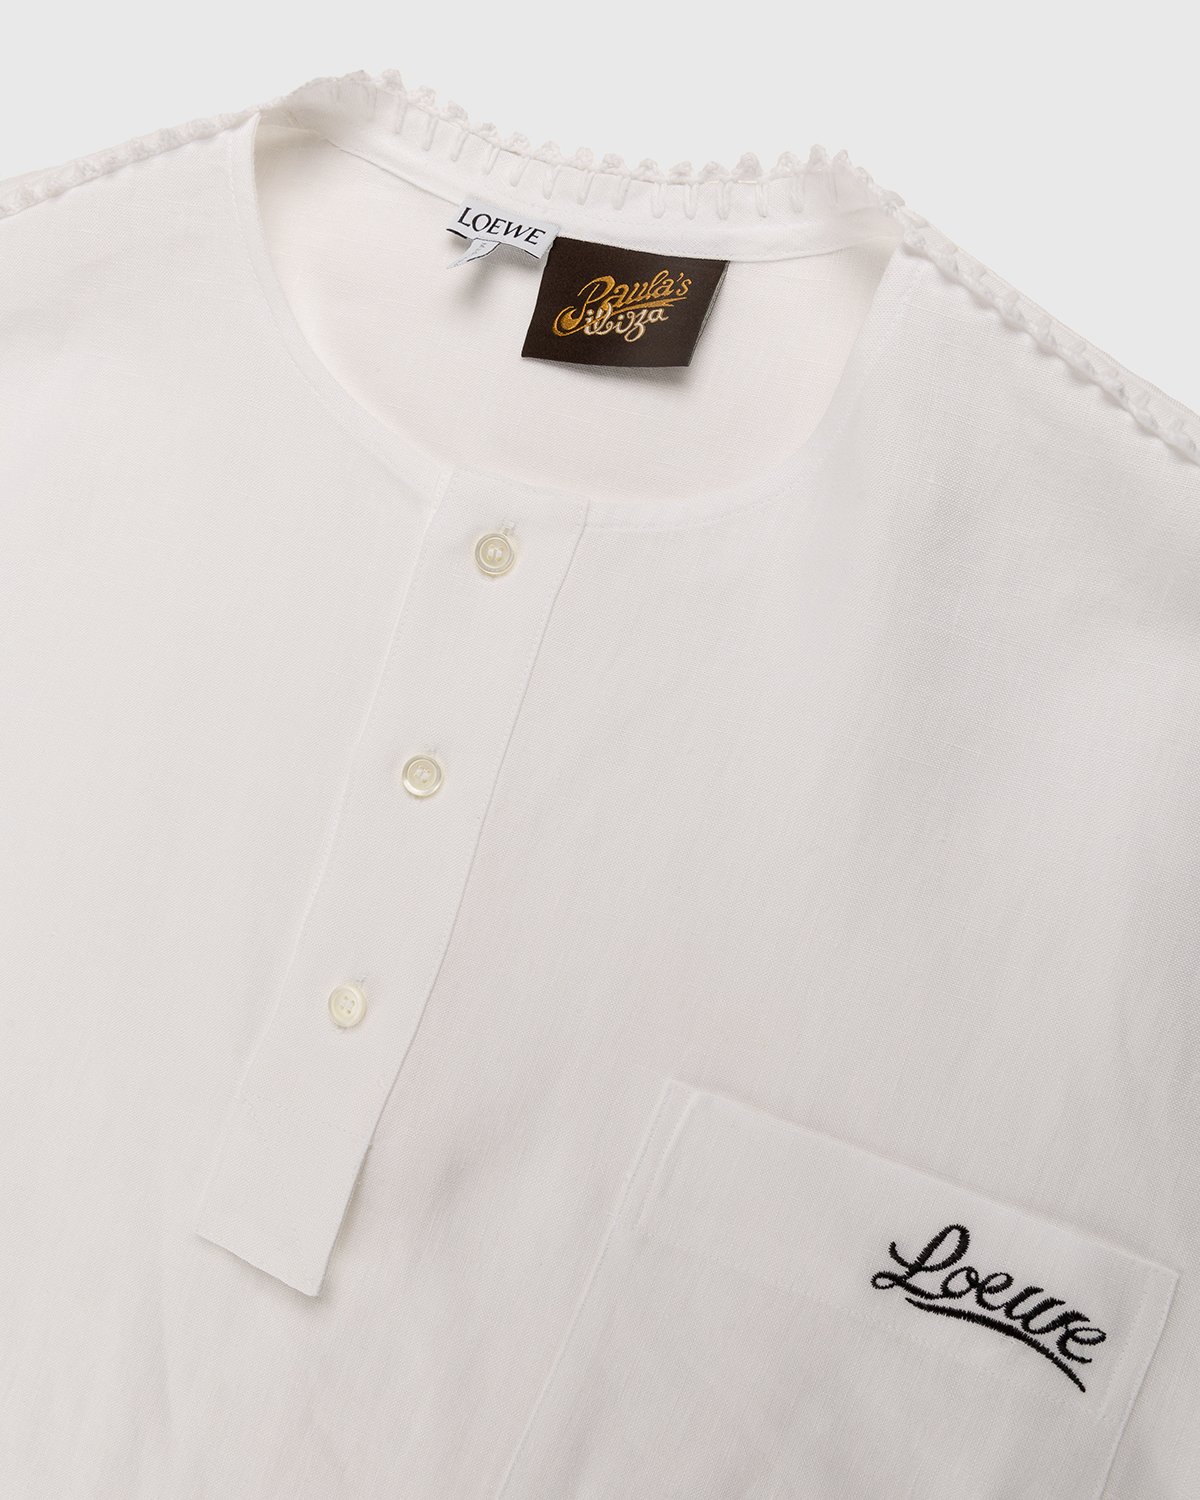 Loewe - Paula's Ibiza Buttoned Pullover Shirt White - Clothing - White - Image 4